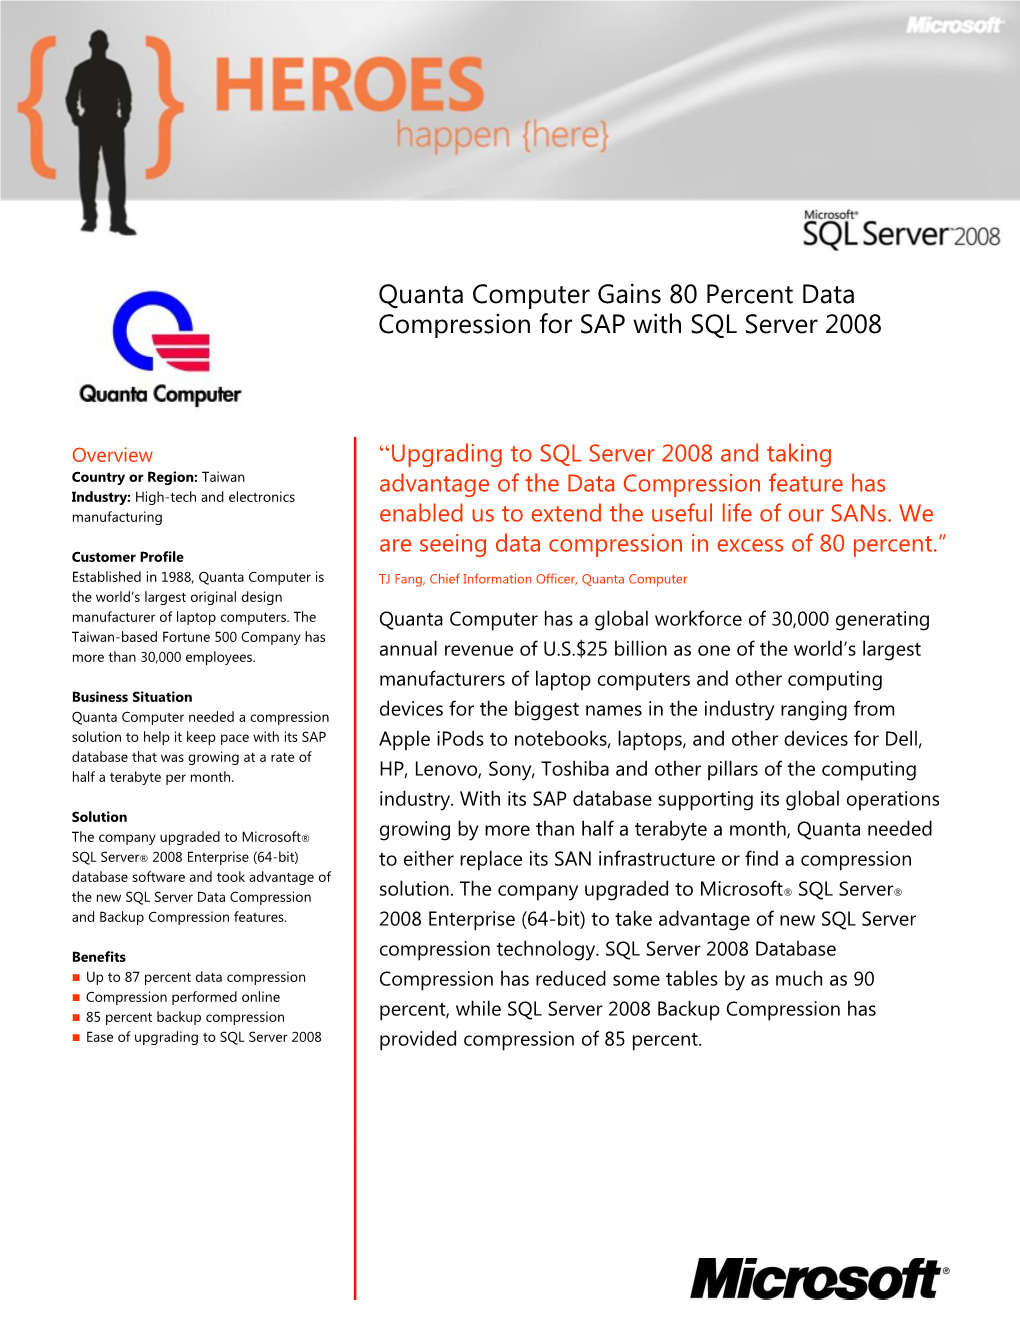 Quanta Computer Gains 80 Percent Data Compression for SAP with SQL Server 2008